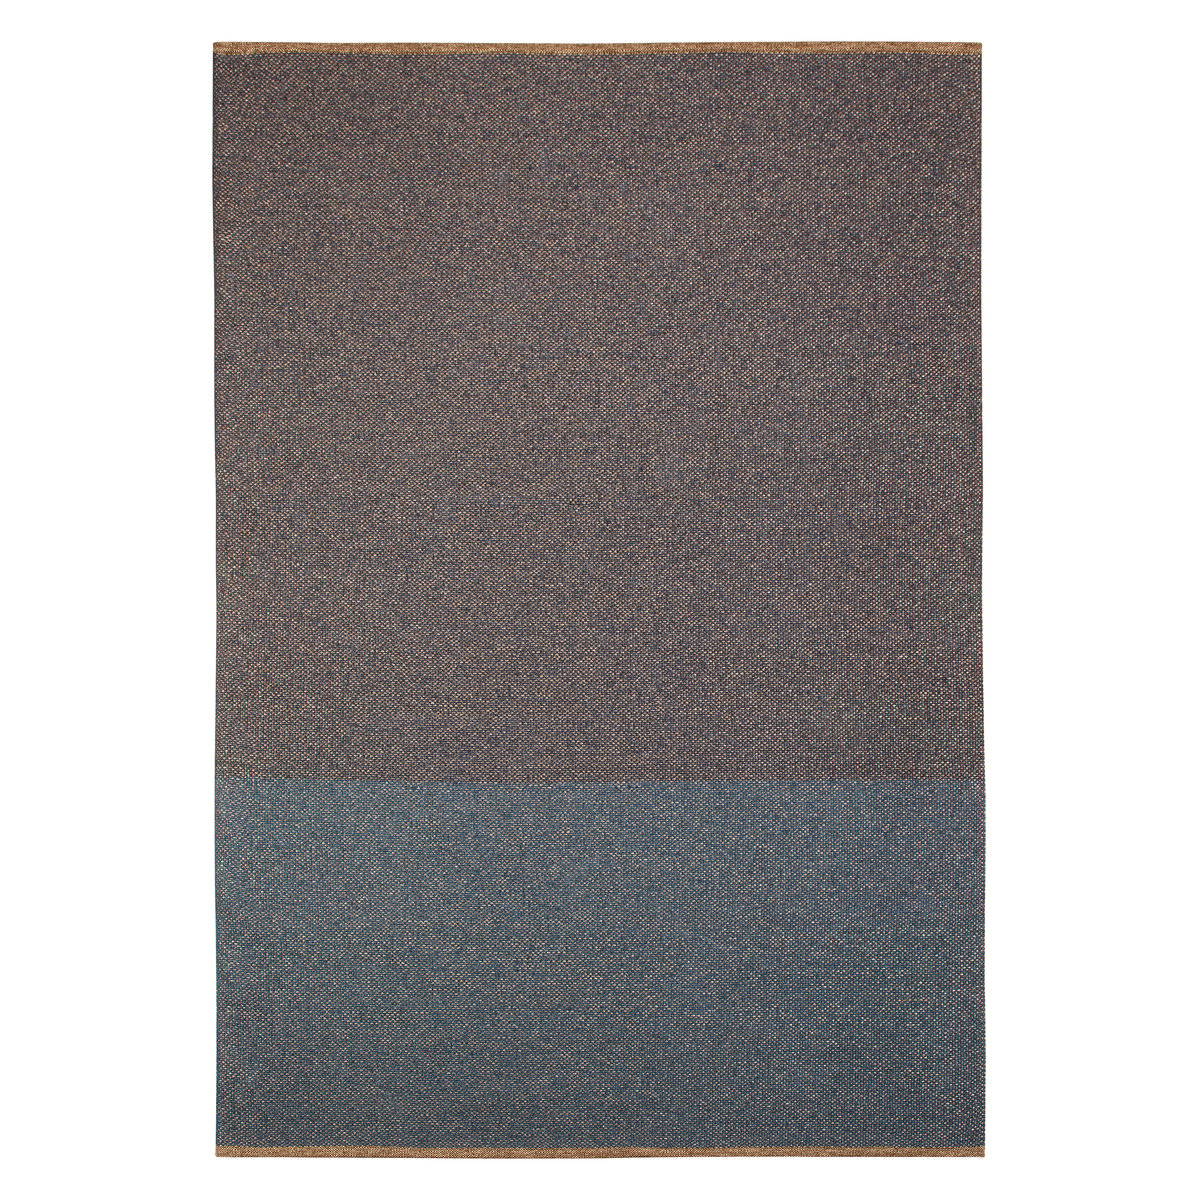 Brita Sweden Moor matto midnight metalliic (sininen-pronssi) 170×300 cm